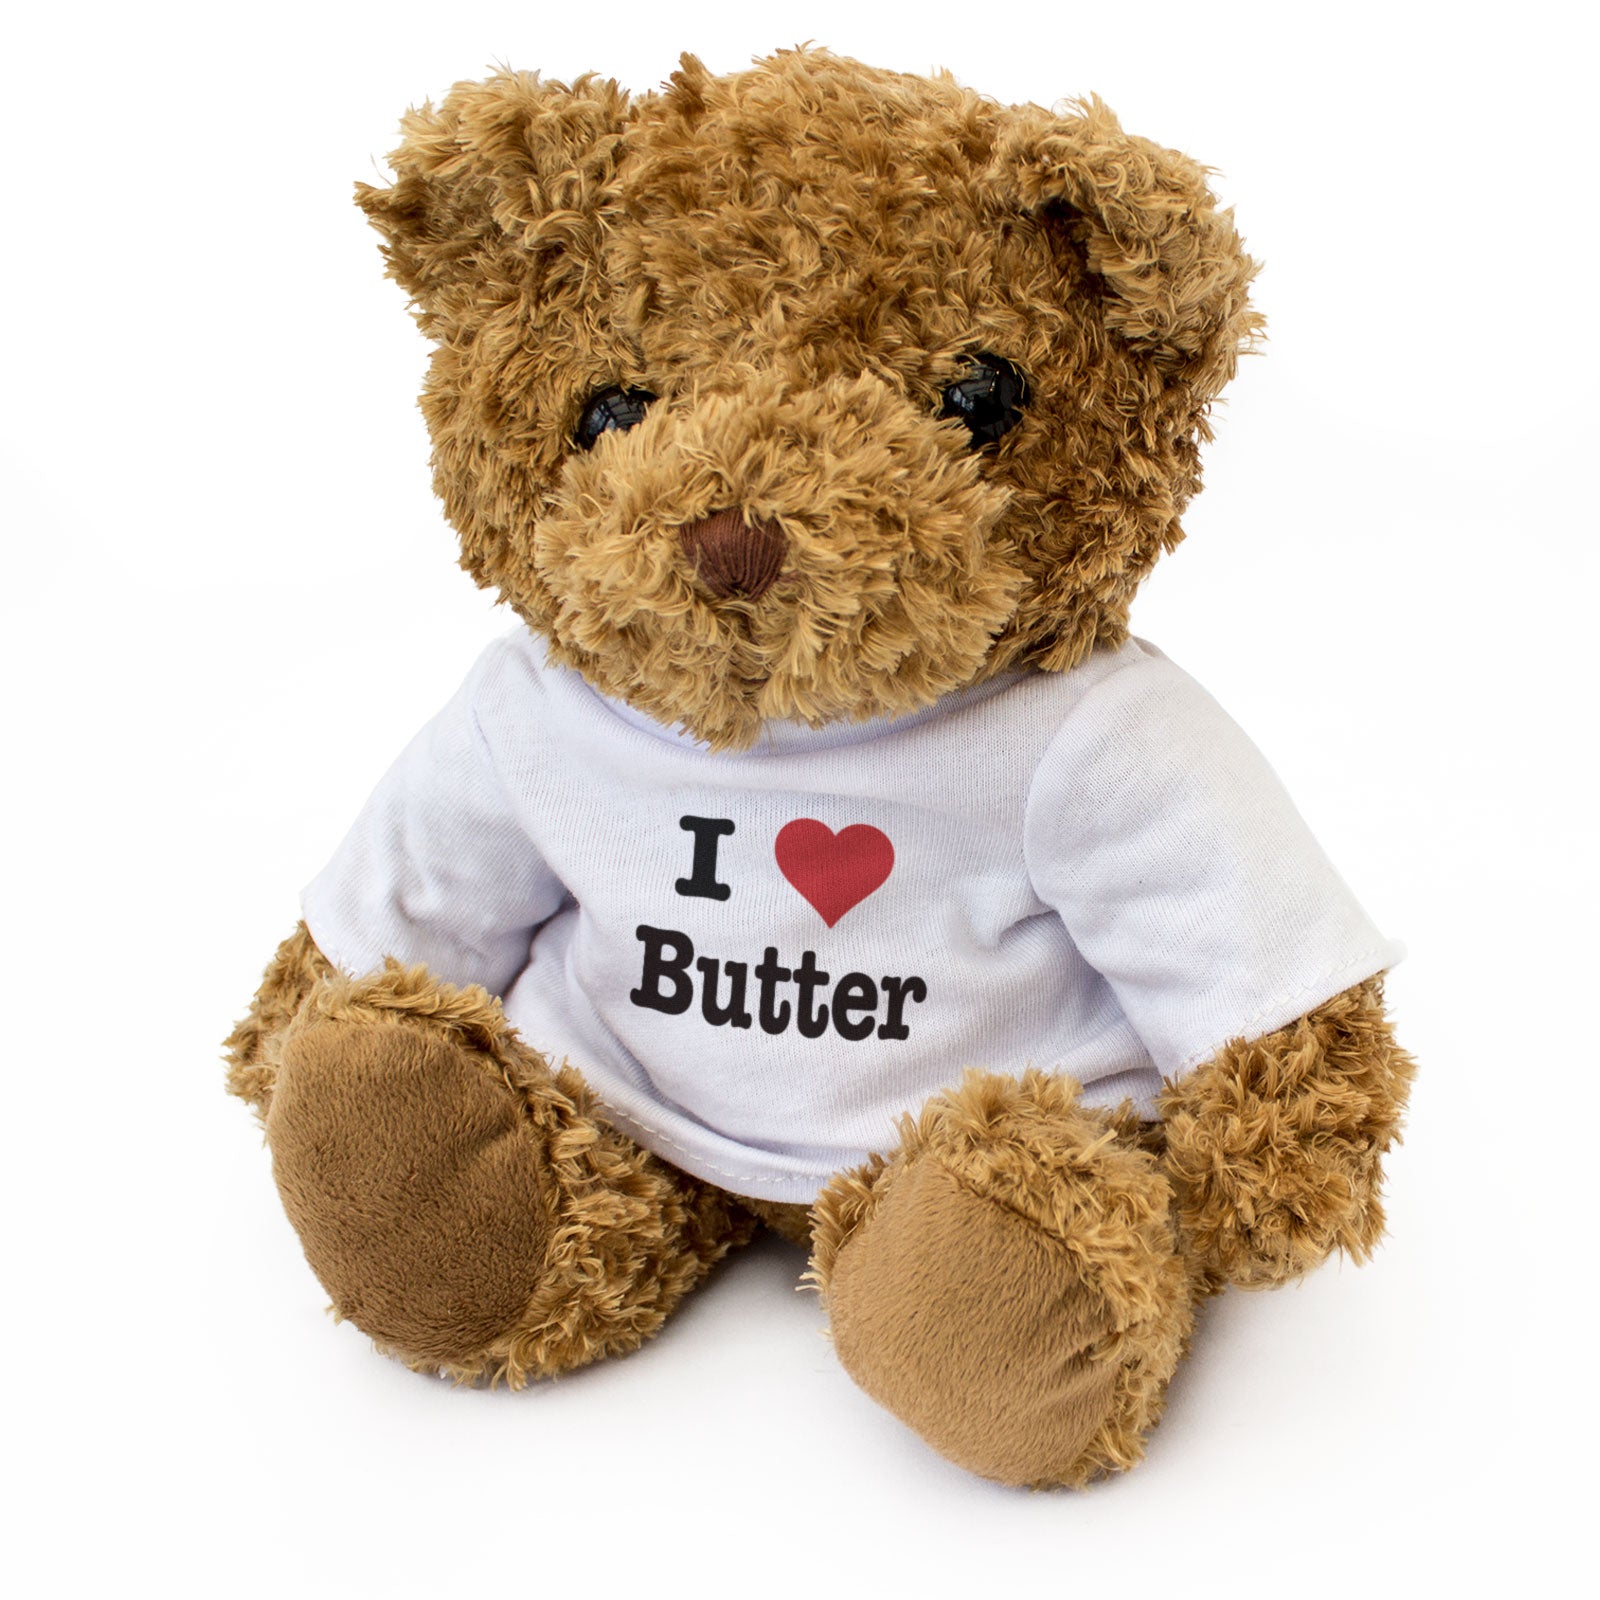 I Love Butter - Teddy Bear